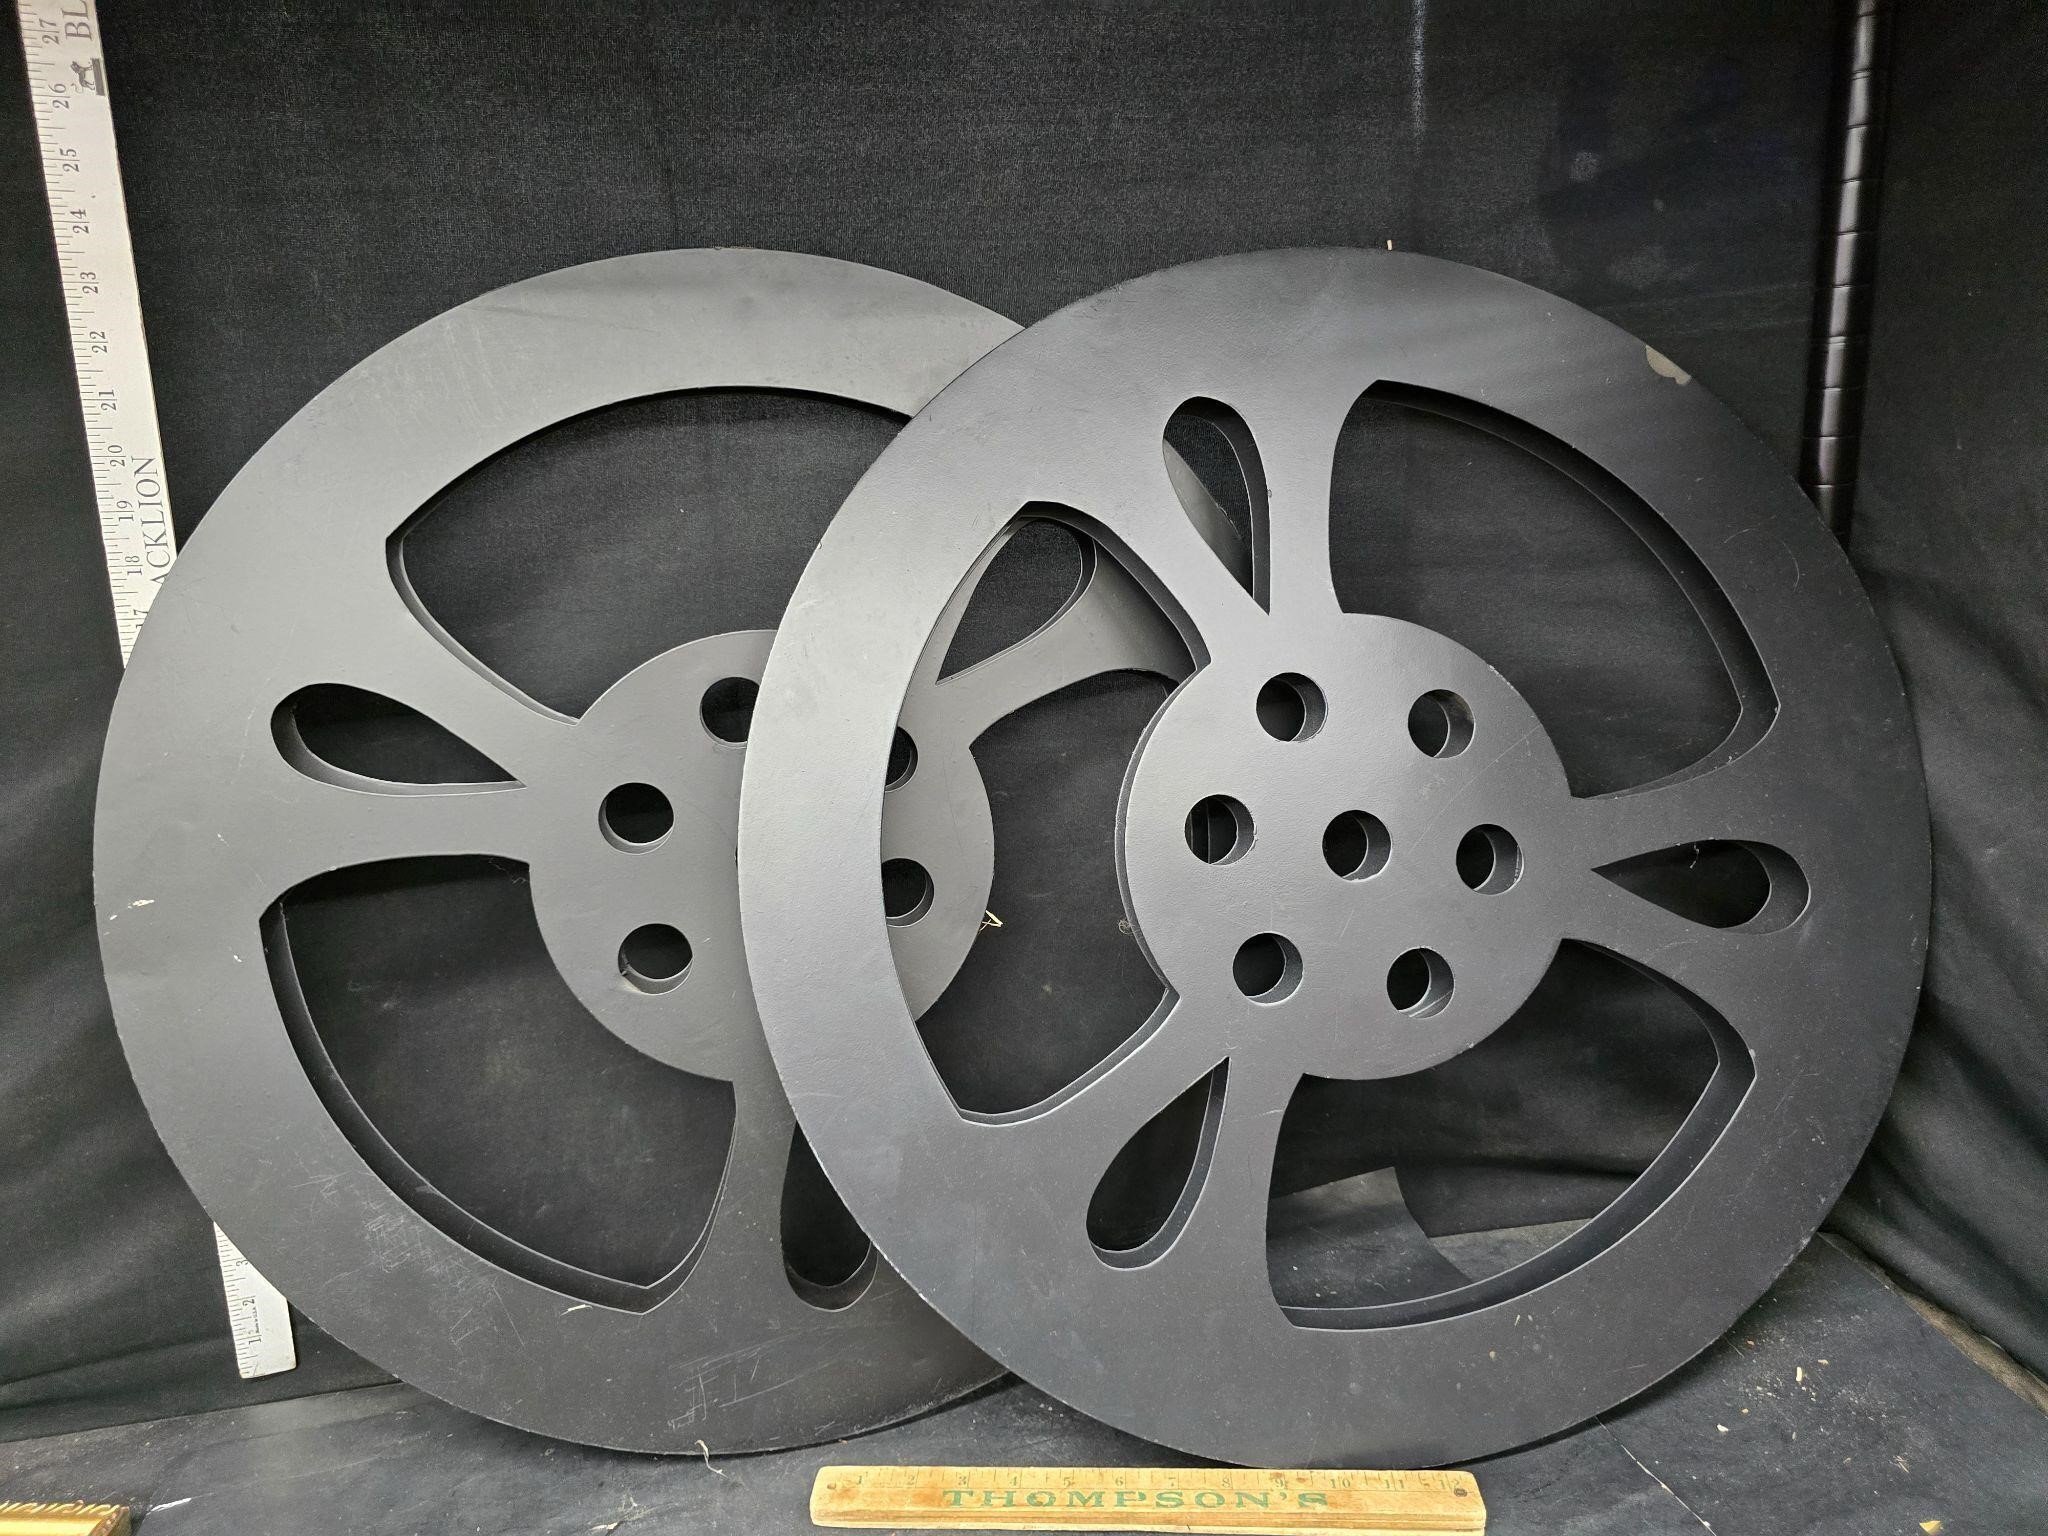 Decorative movie reels